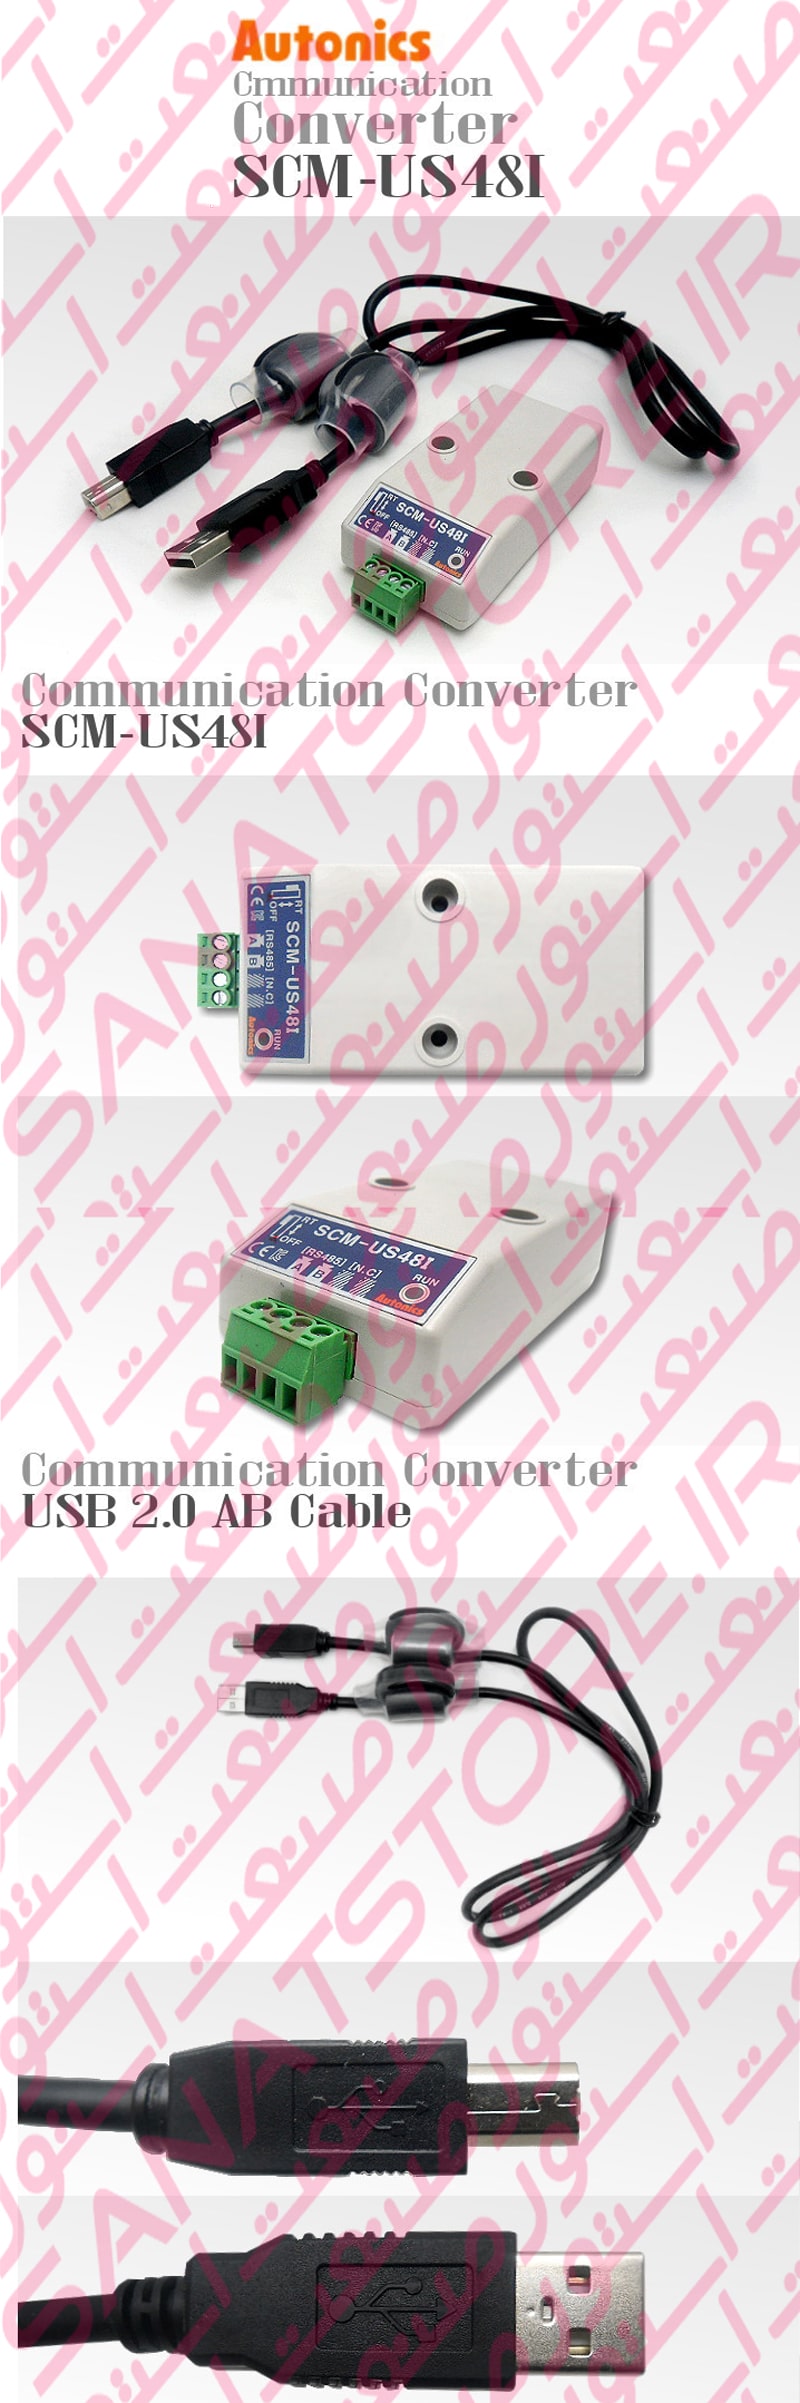 Autonics Communication converter SCM-US48I